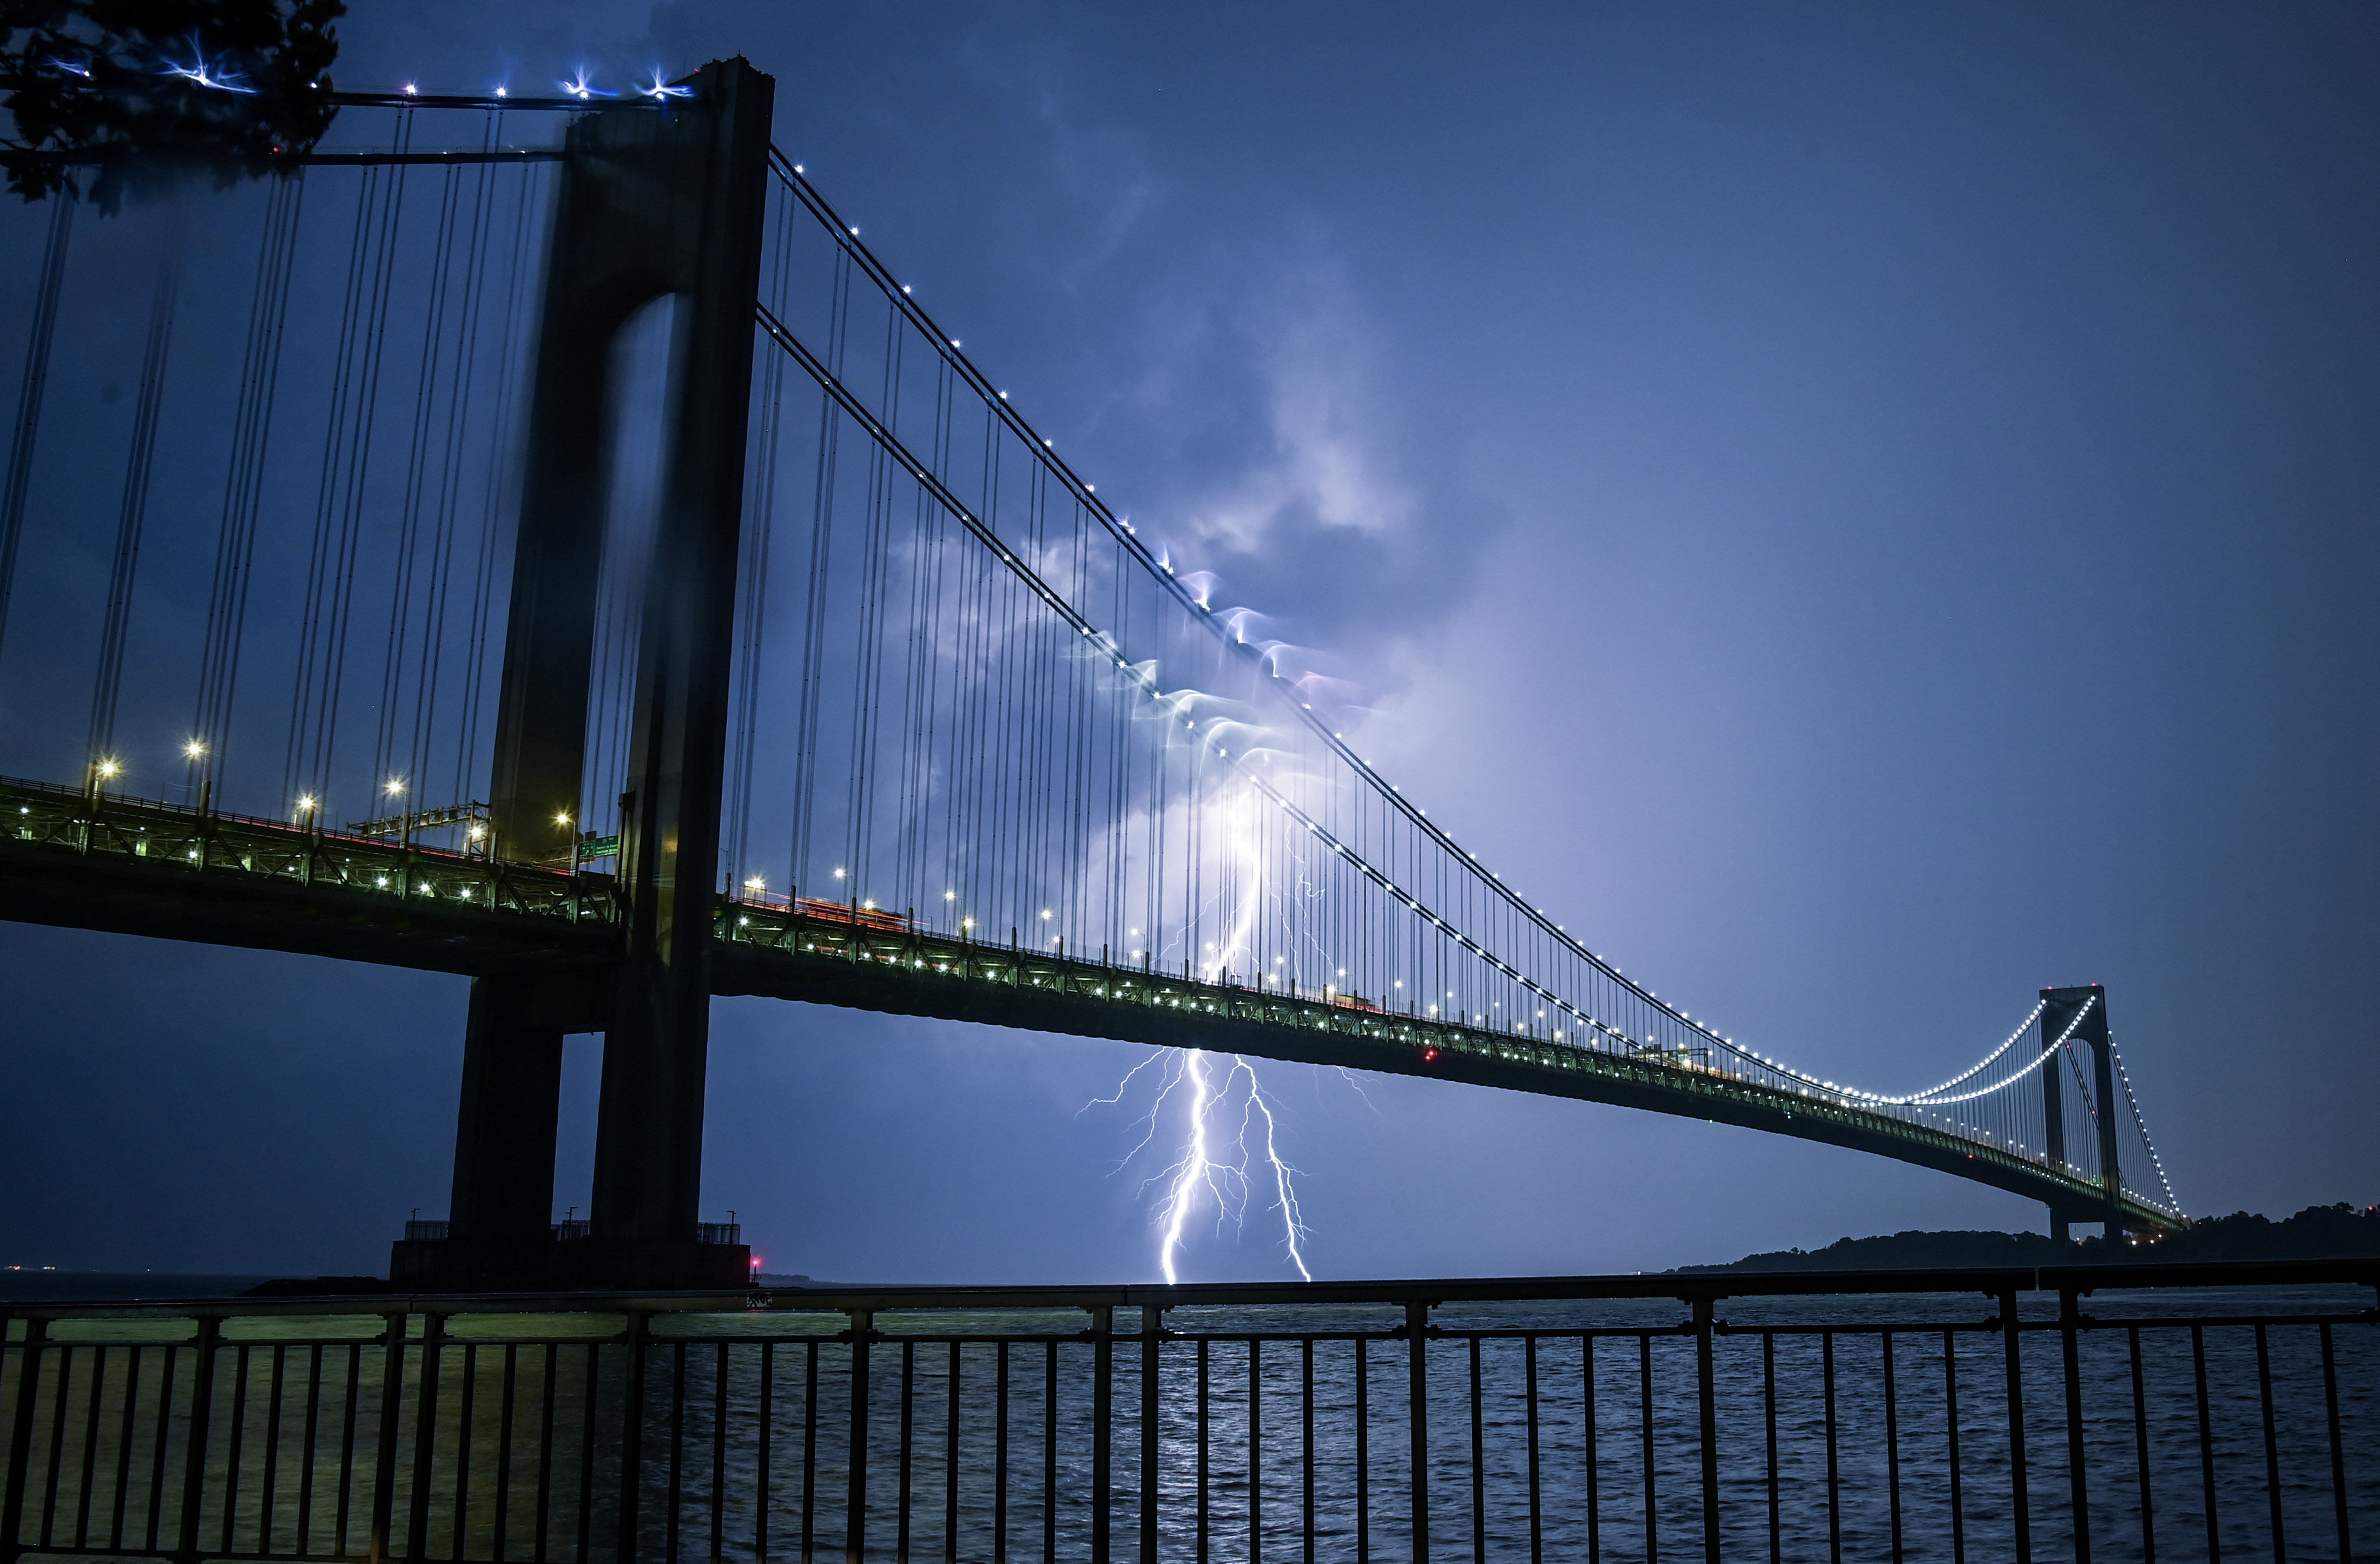 PHOTOS: Lightning at the Verrazzano Narrows Bridge Captured During Overnight Storm